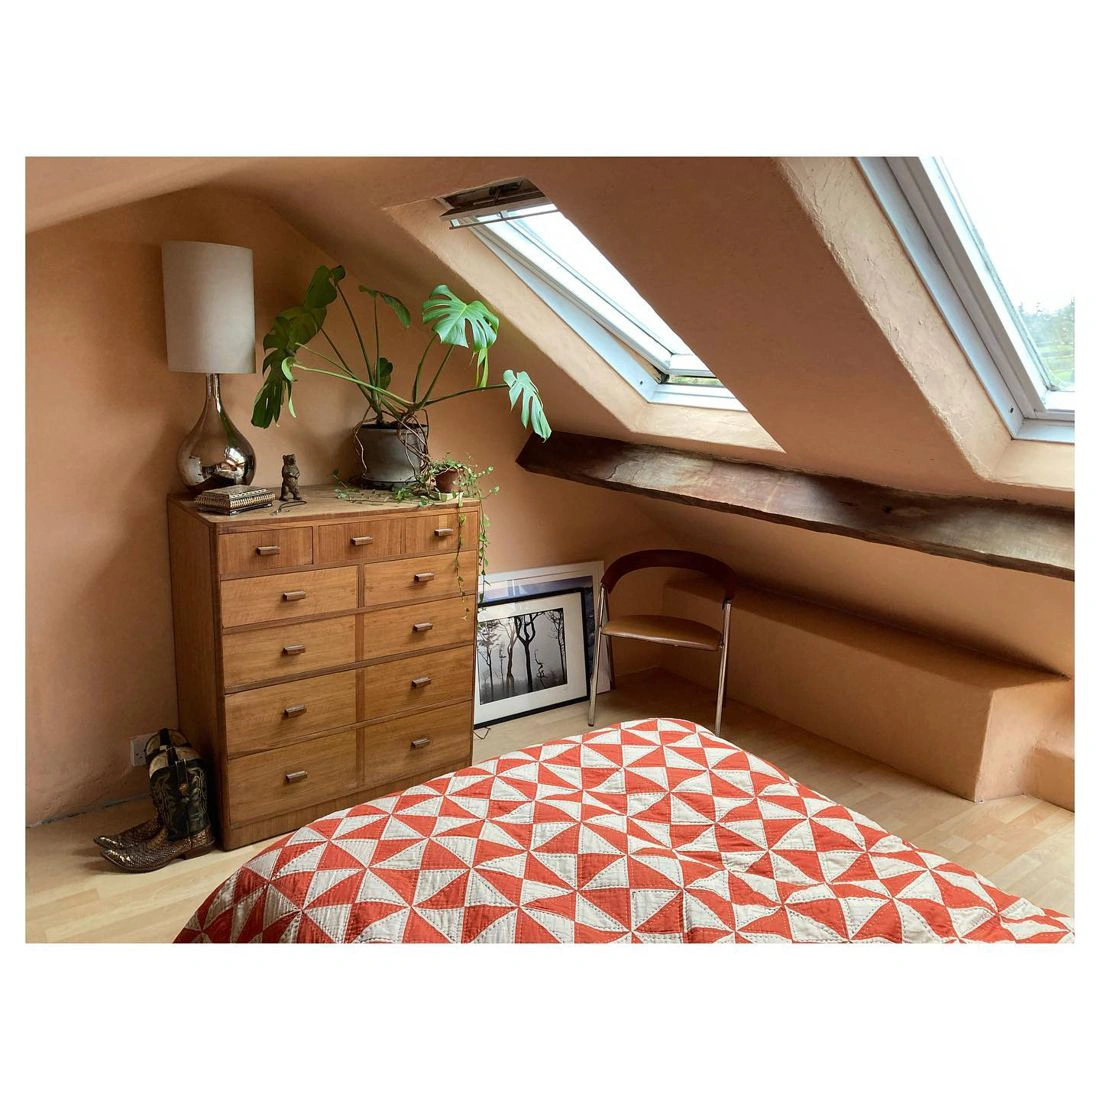 Farrow and Ball Faded Terracotta CC8 bedroom